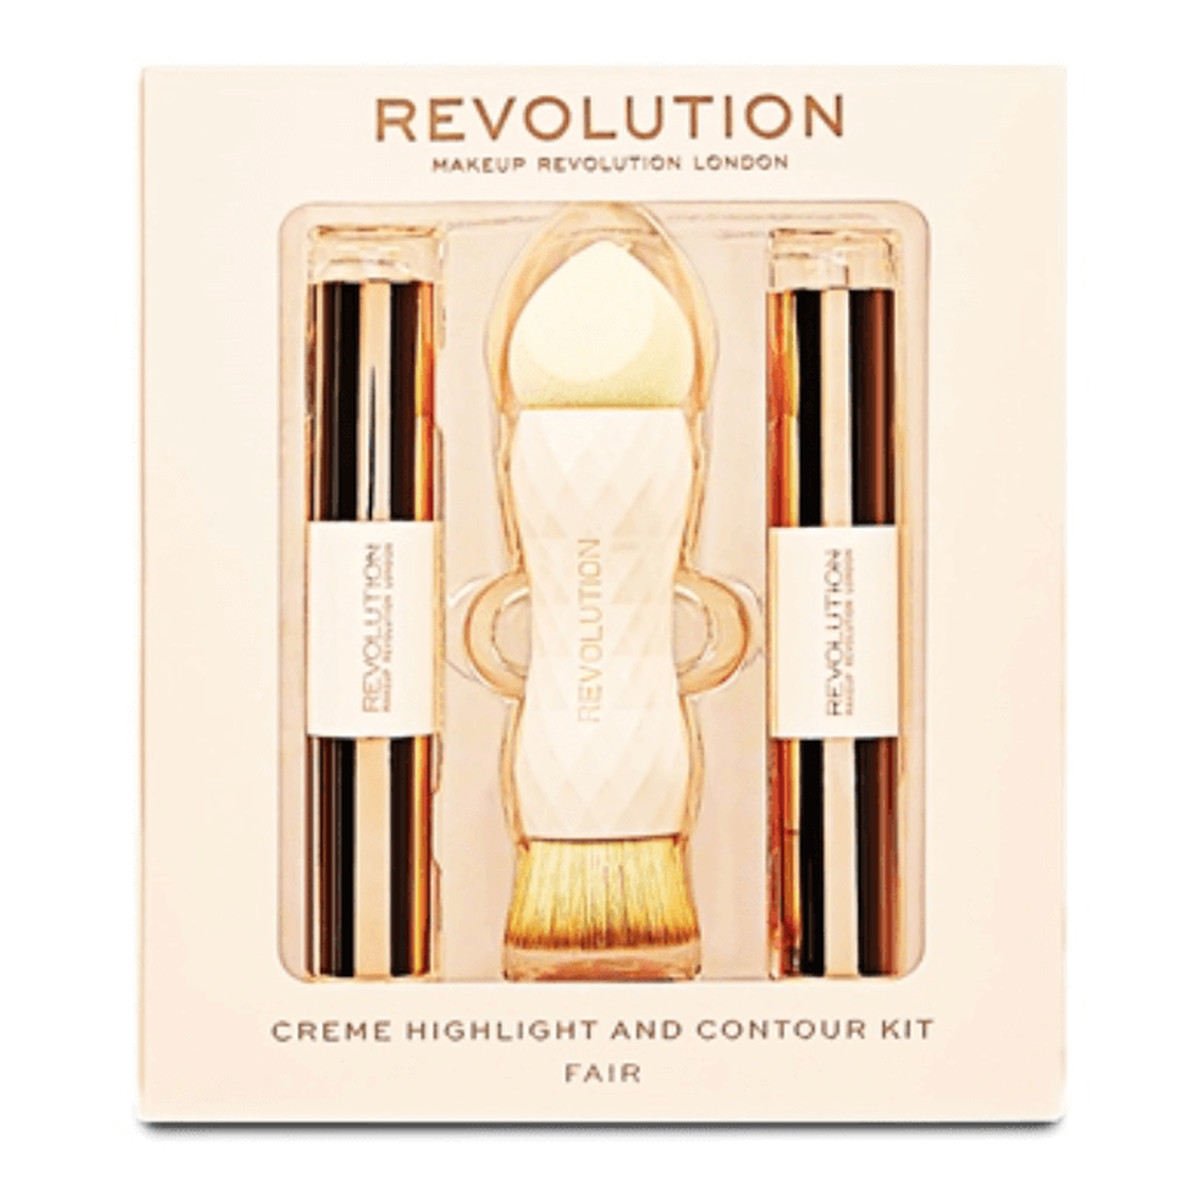 Makeup Revolution Creme Highlight and Contour Kit zestaw do konturowania